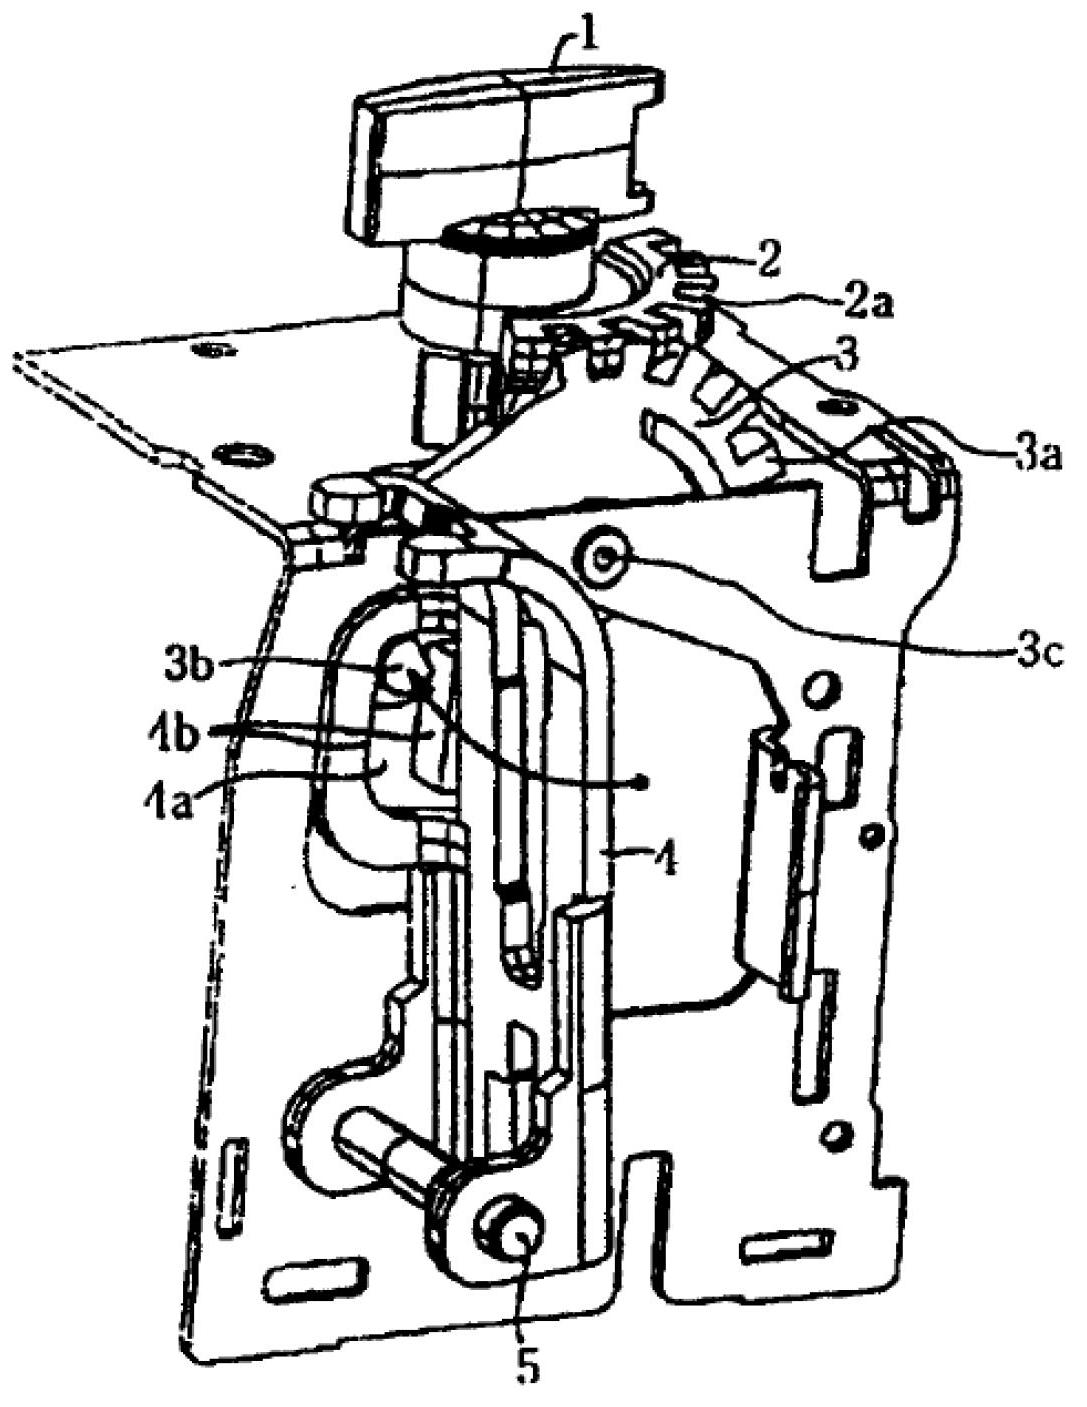 Manual motor starter